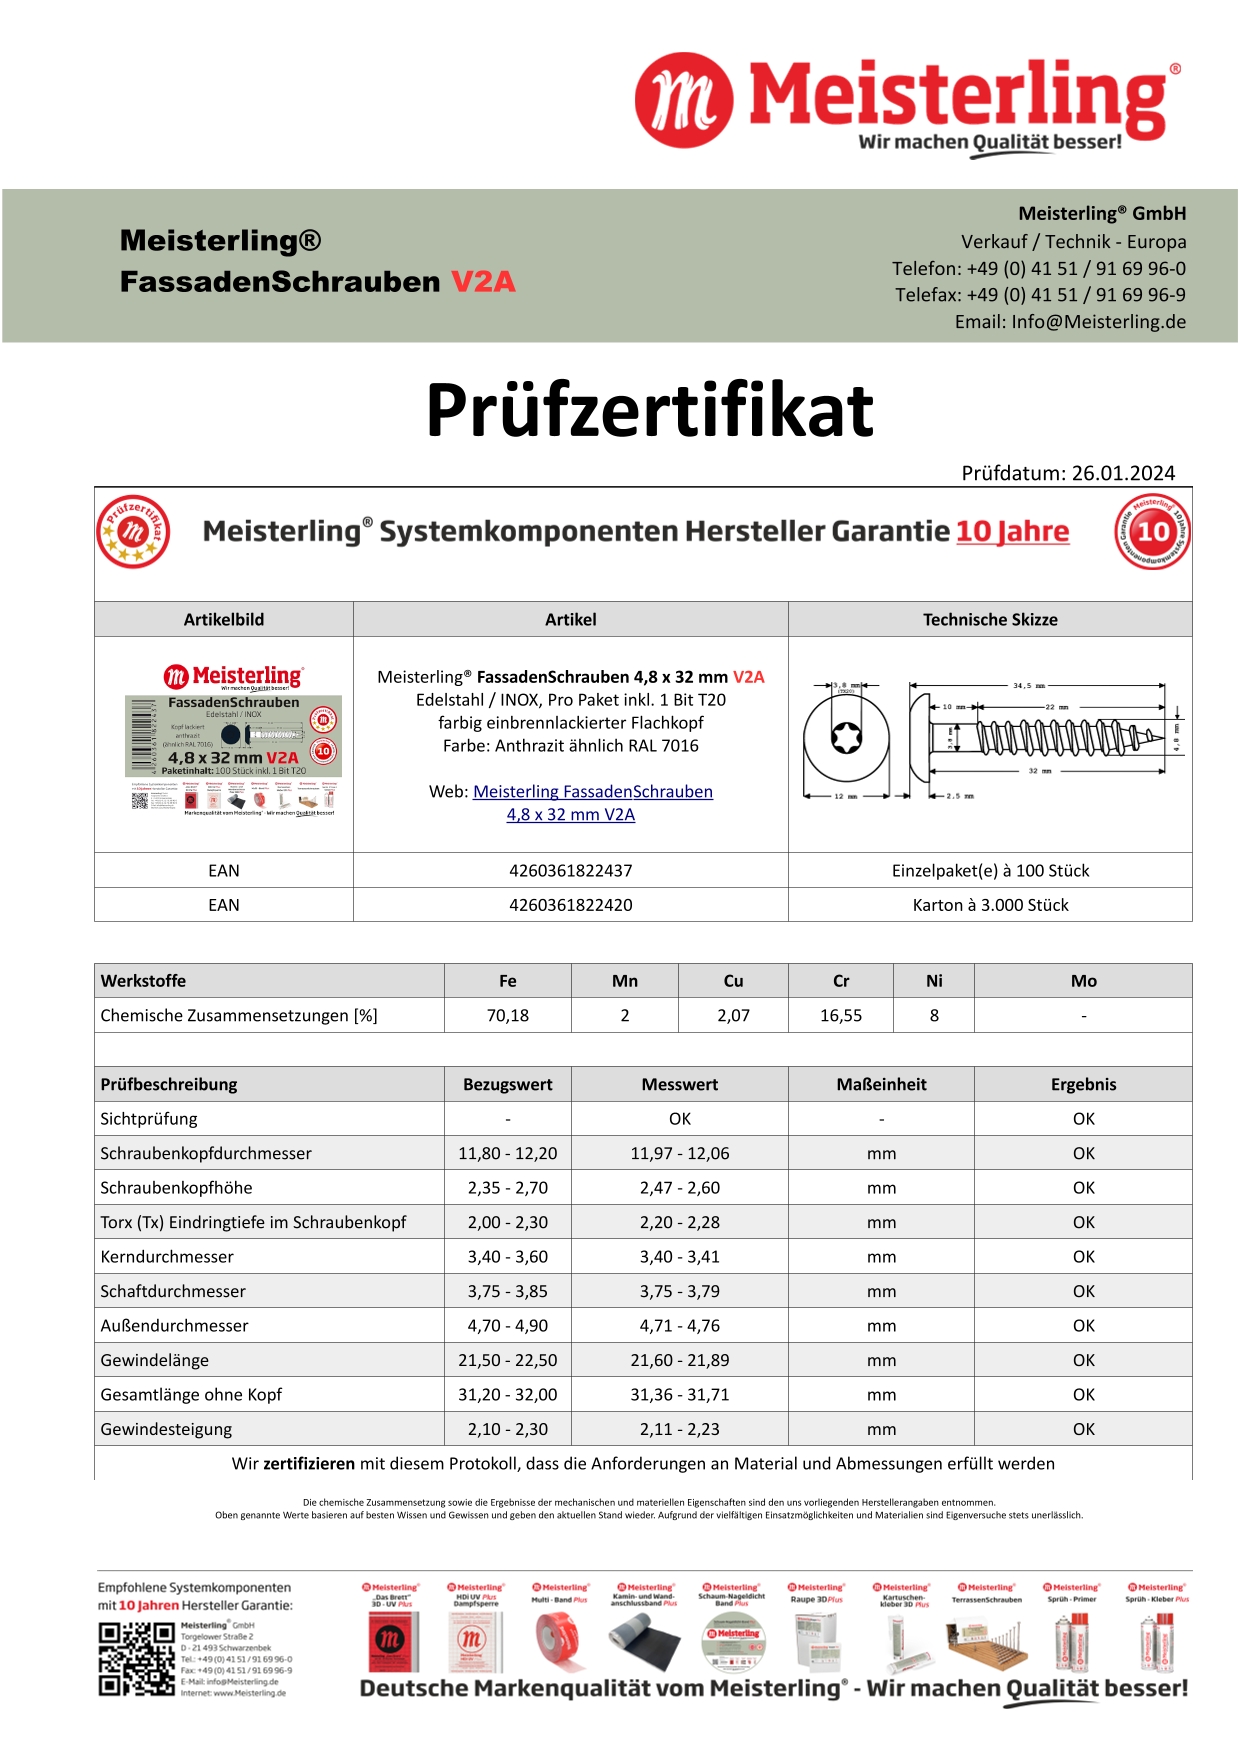 Prüfzertifikat Meisterling® FassadenSchrauben 4,8 x 32 mm V2a anthrazit